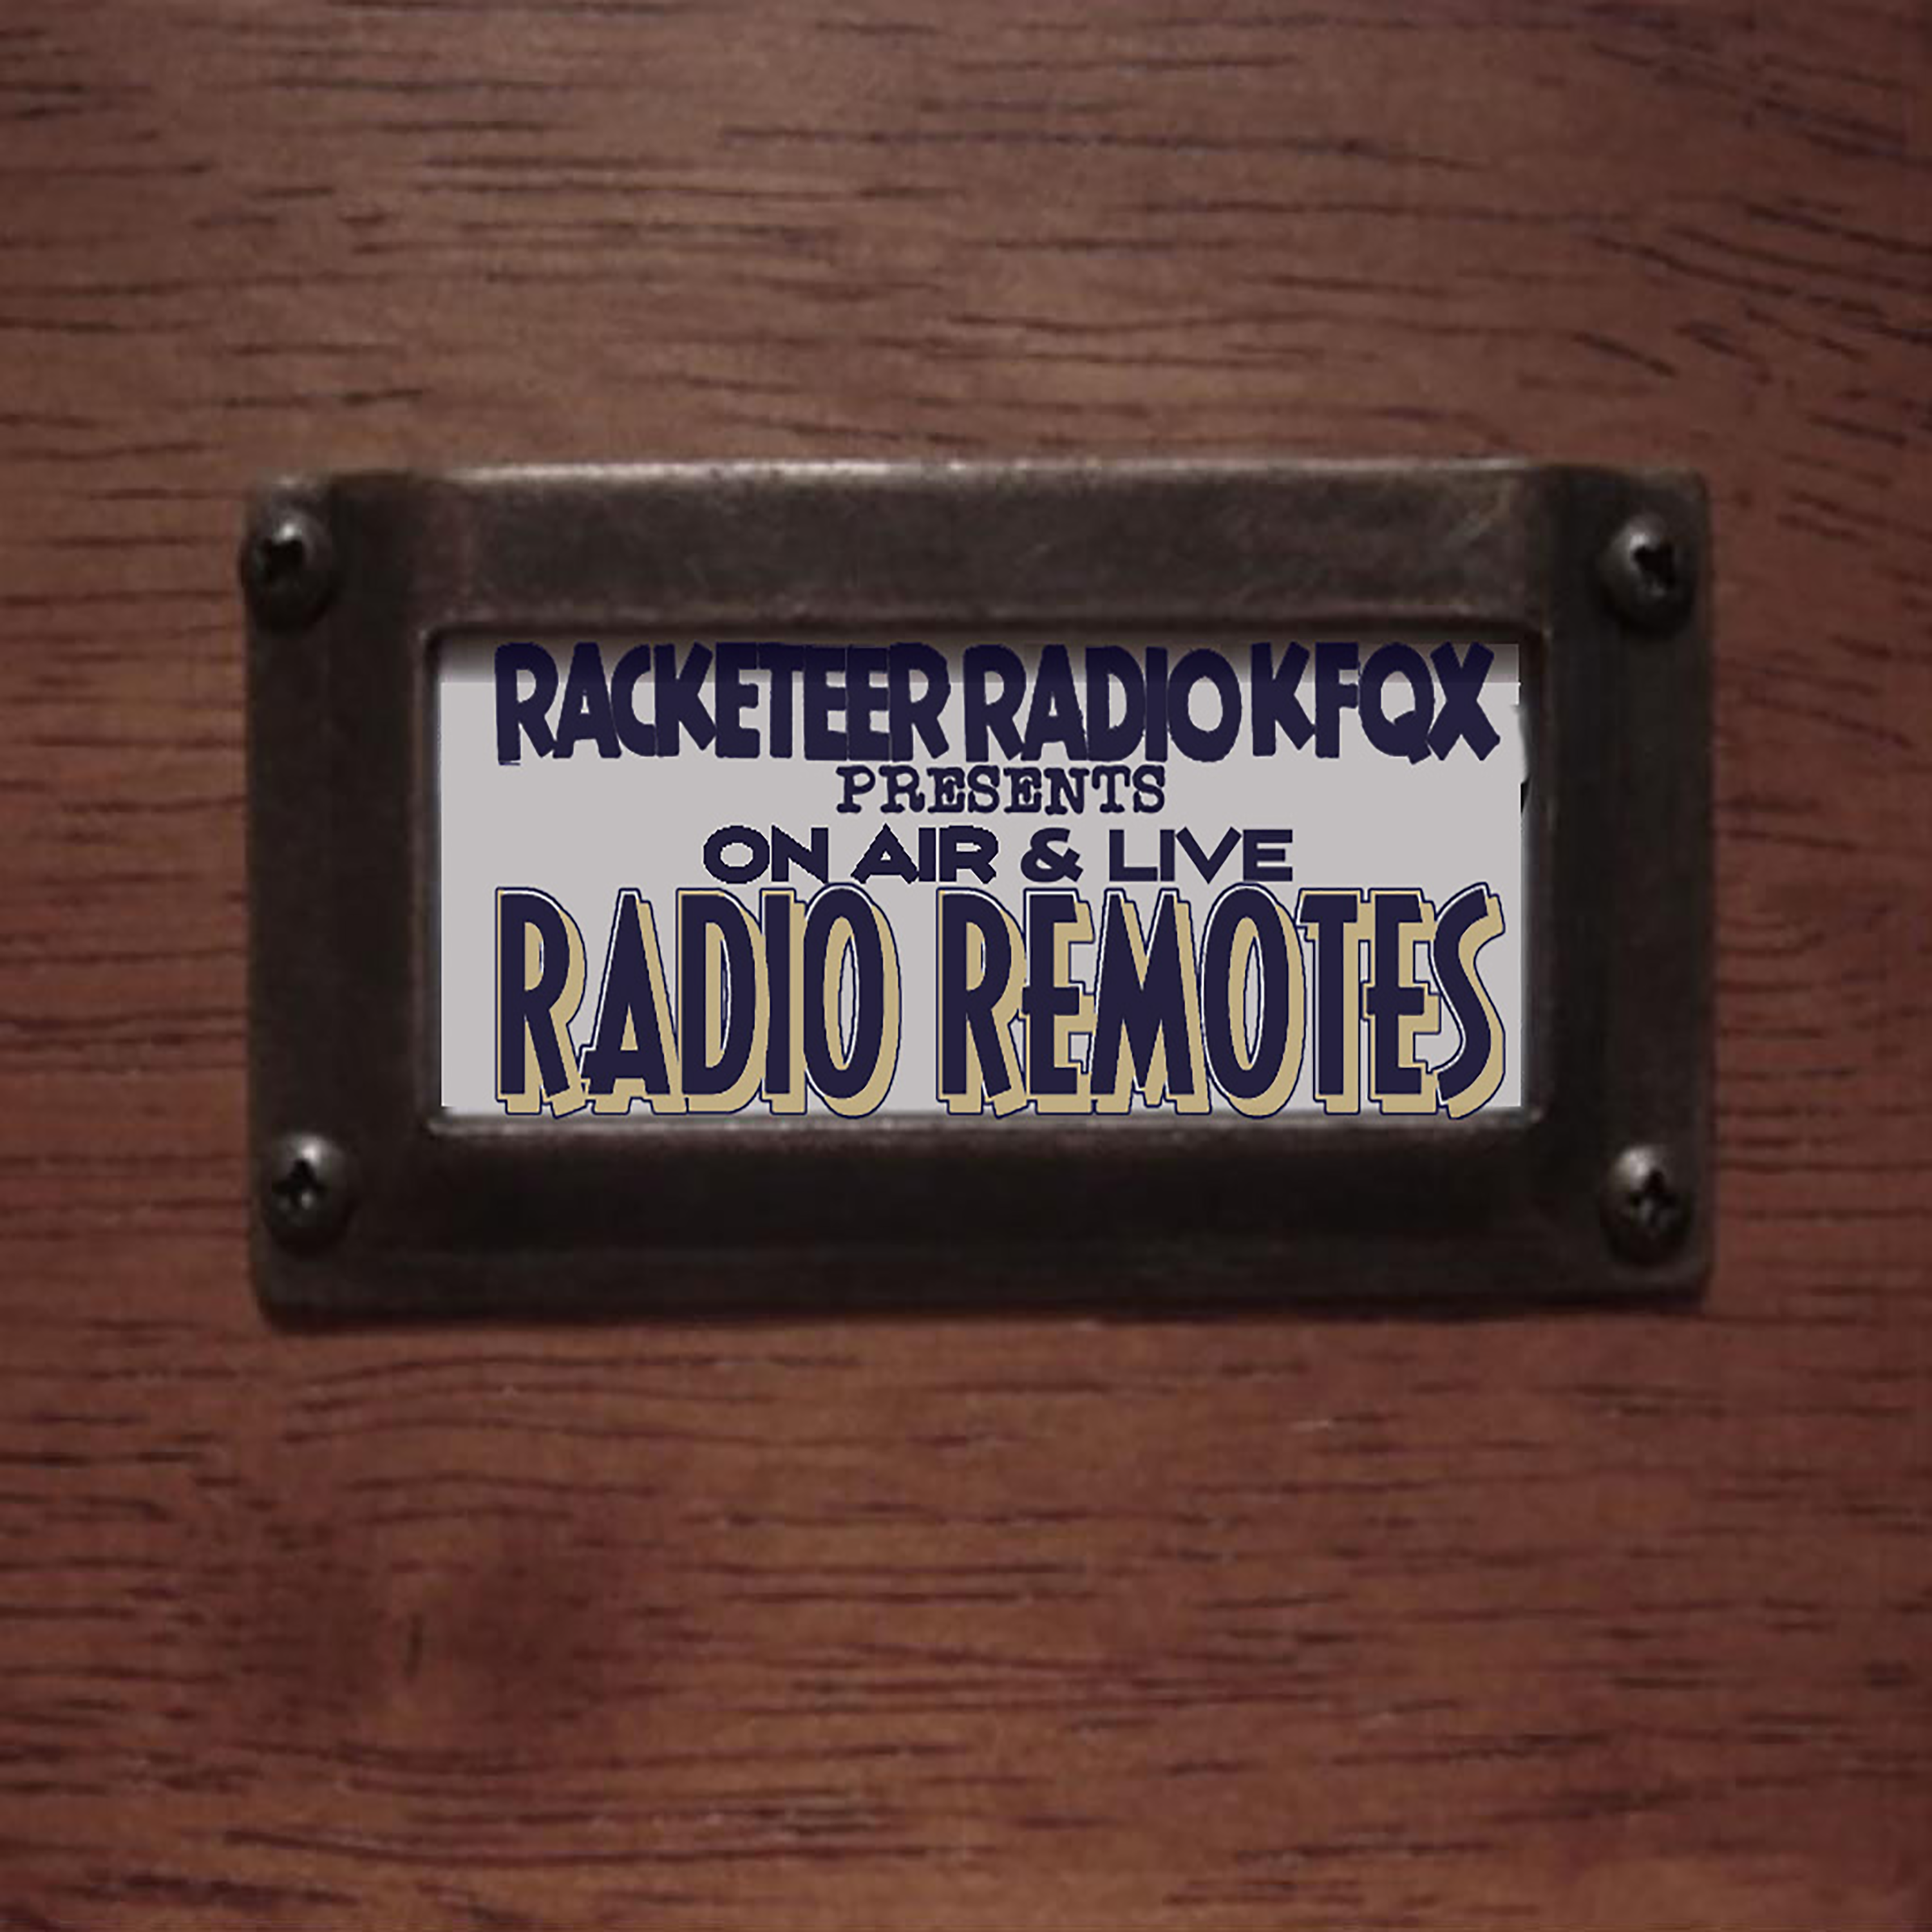 Racketeer Radio KFQX Radio Remotes LOGO.png (4.13 MB)